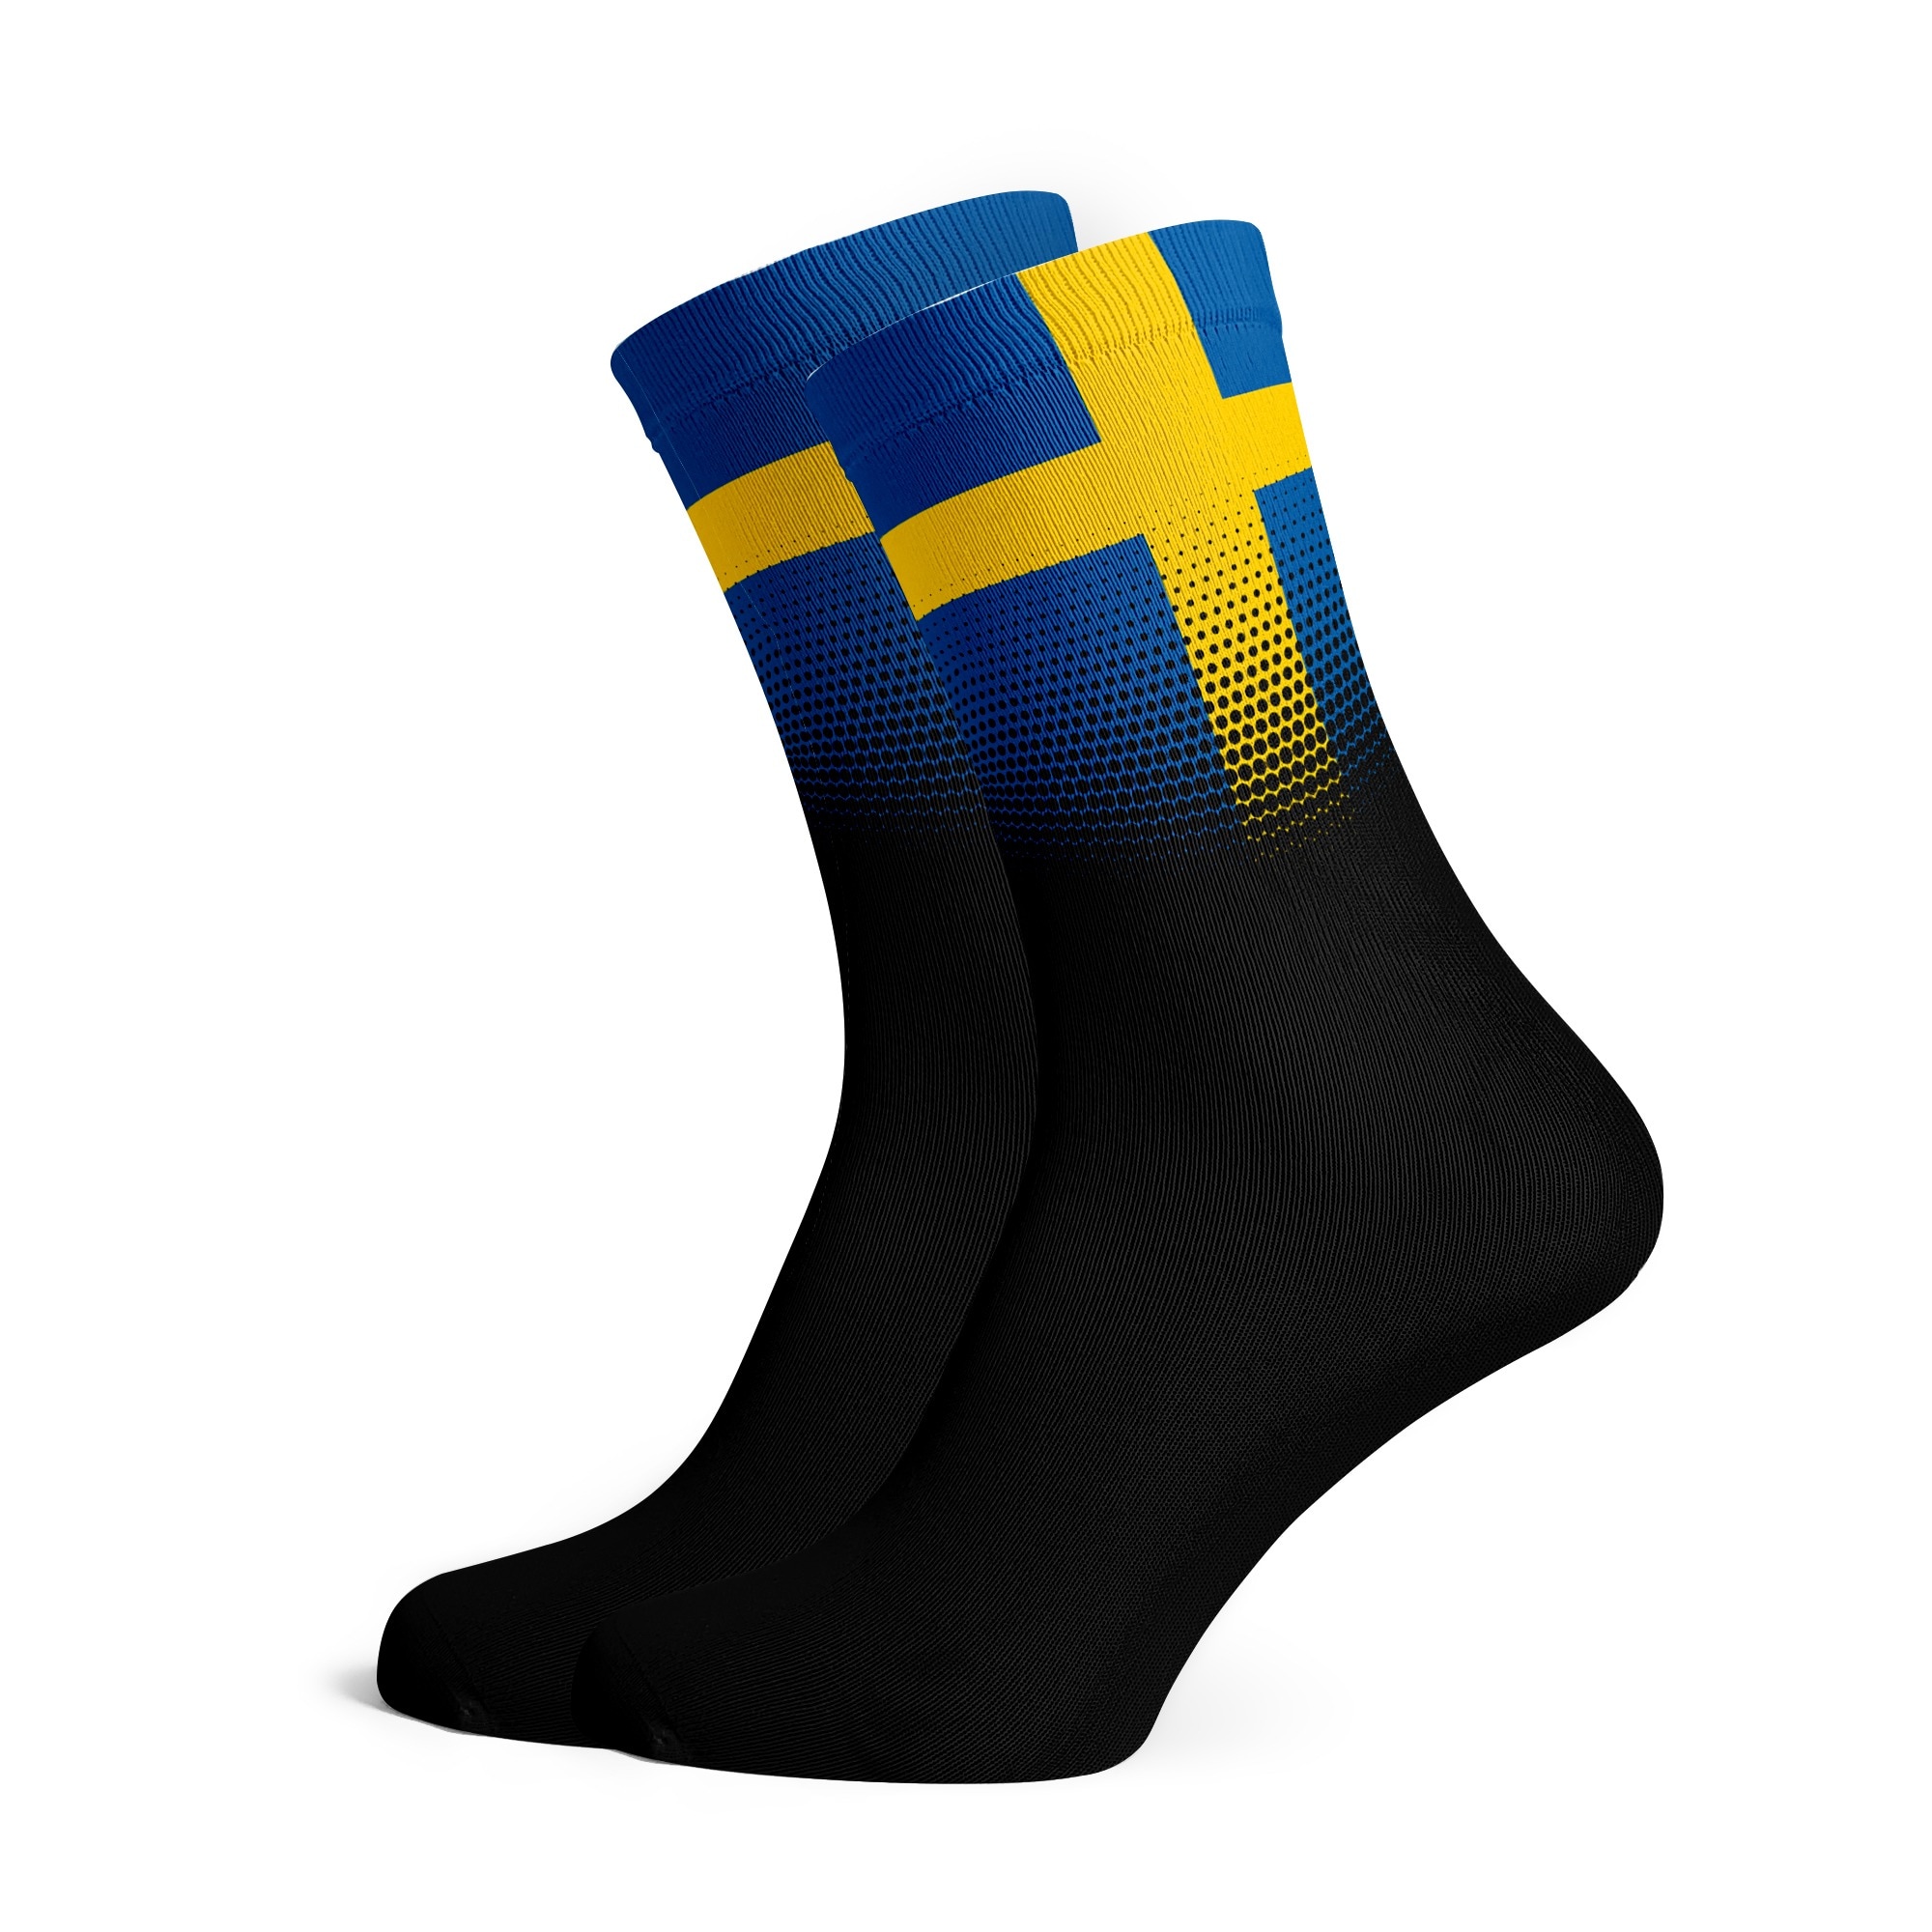 SOX Footwear Socka, Team Sweden, Black